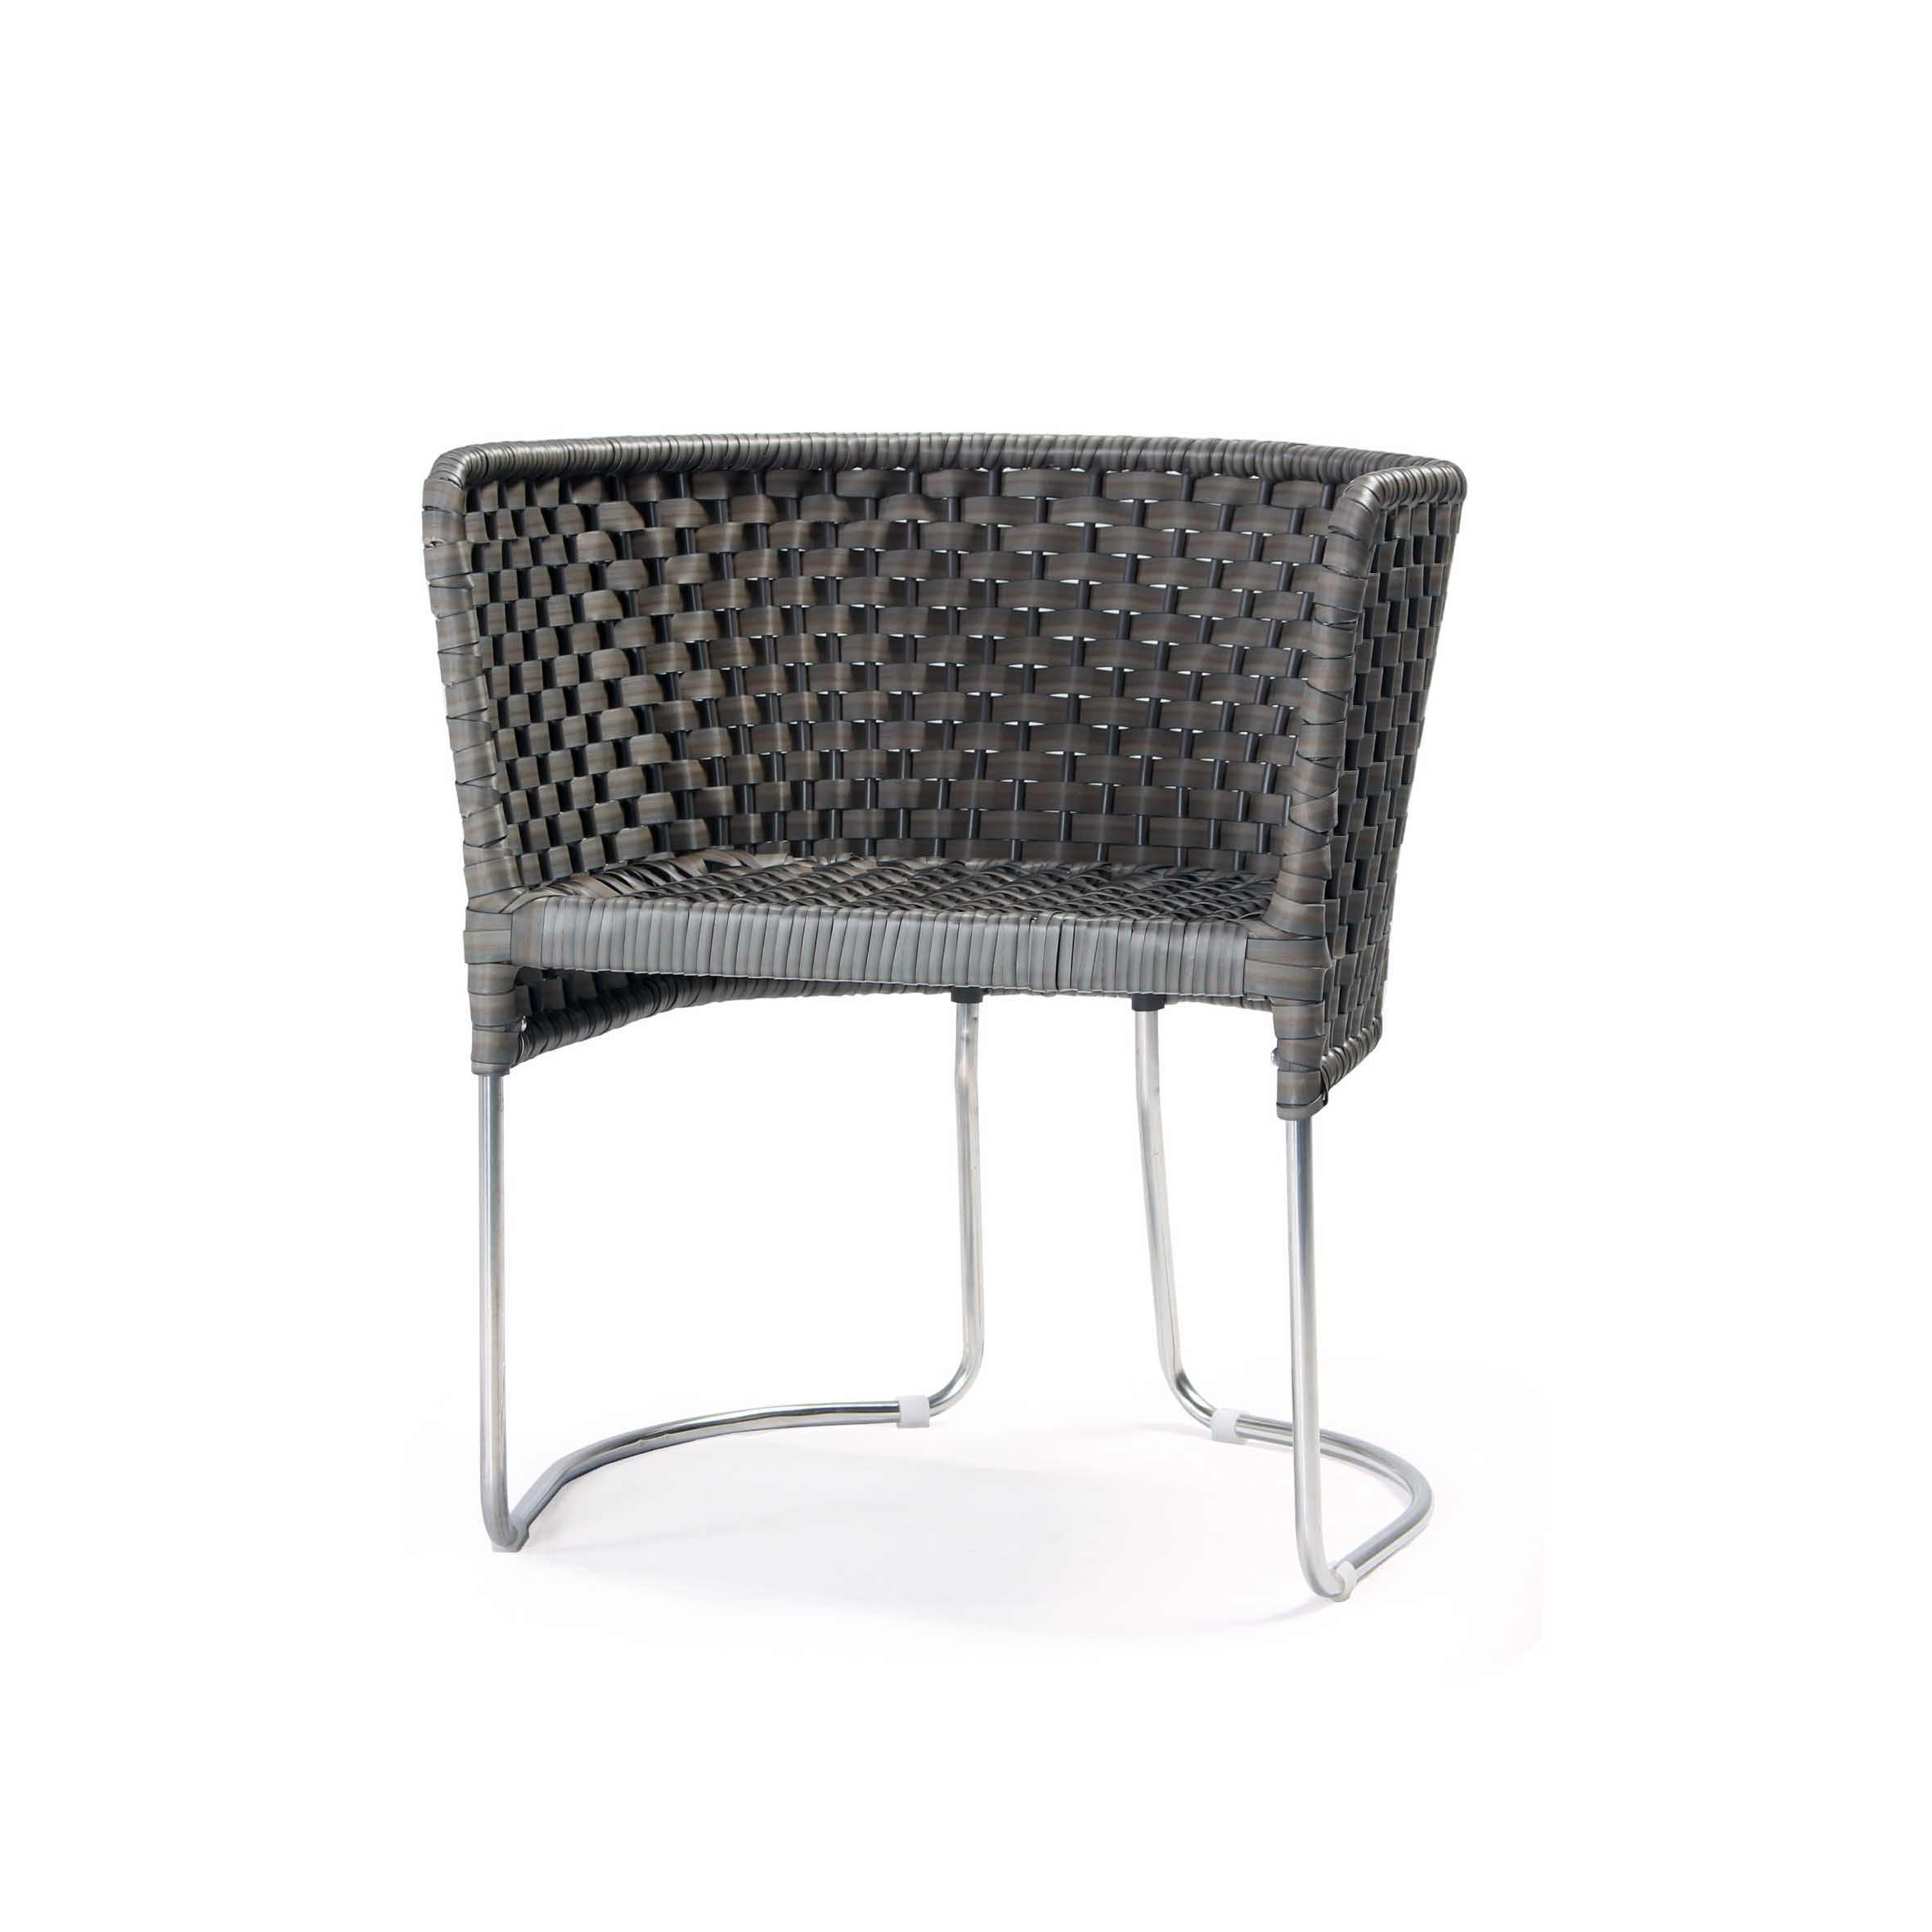 China wholesale Outdoor Wicker Patio Furniture Factory –  Iris rattan leisure chair – TAILONG